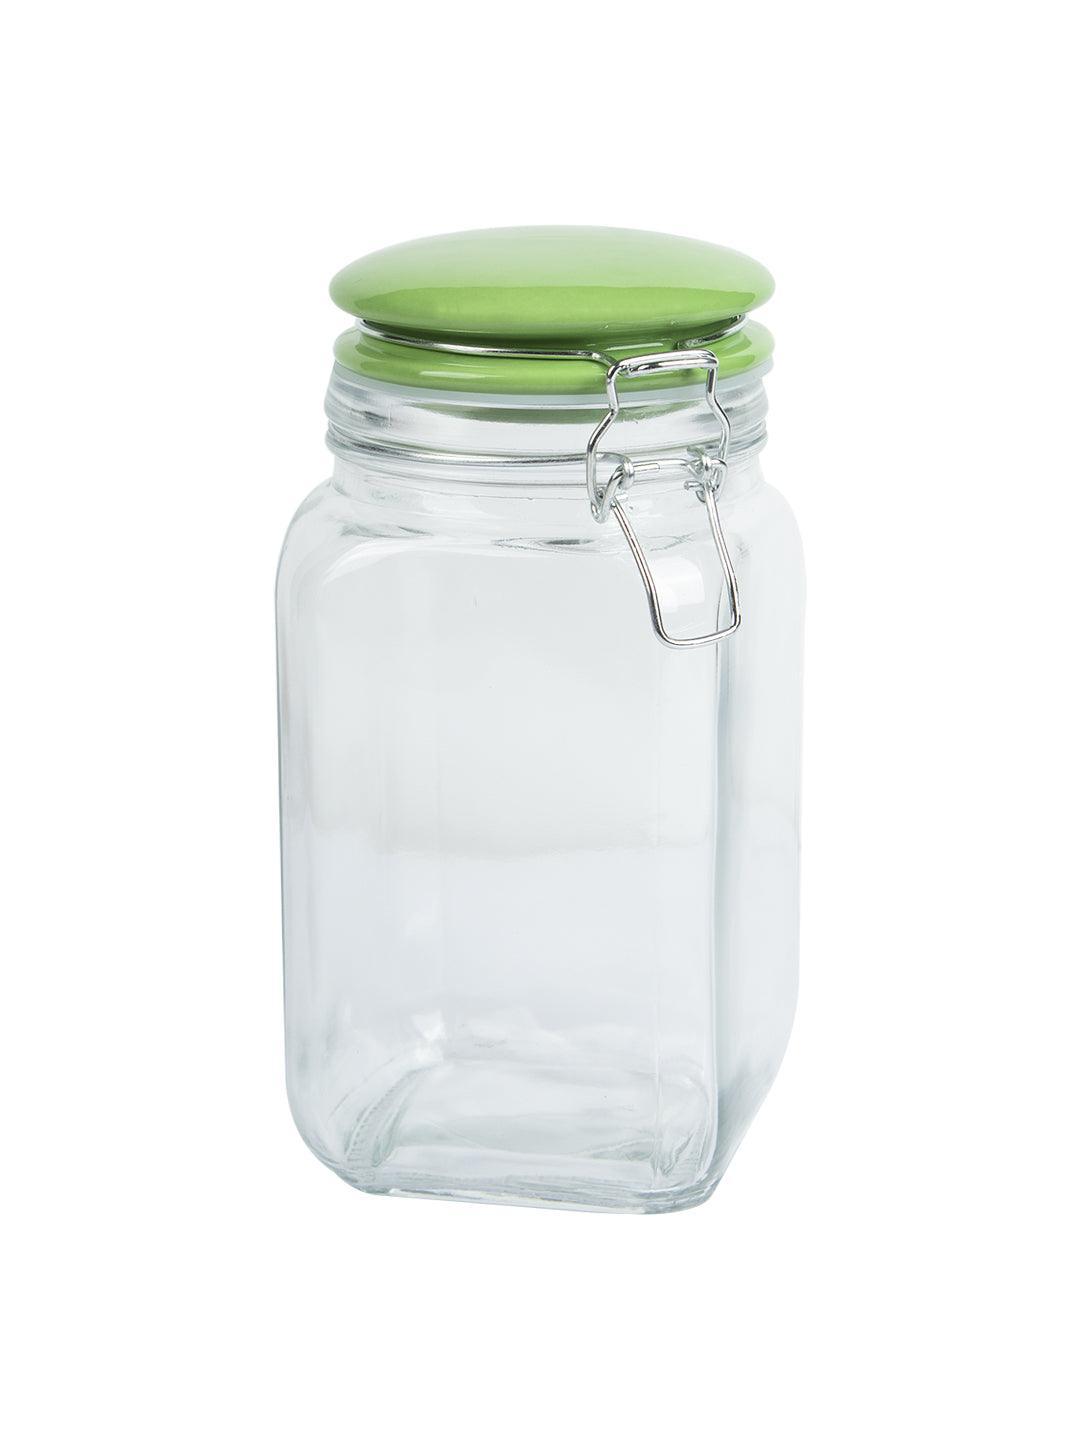 Glass Jar With Green Ceramic Lid - 1200 Ml - MARKET 99